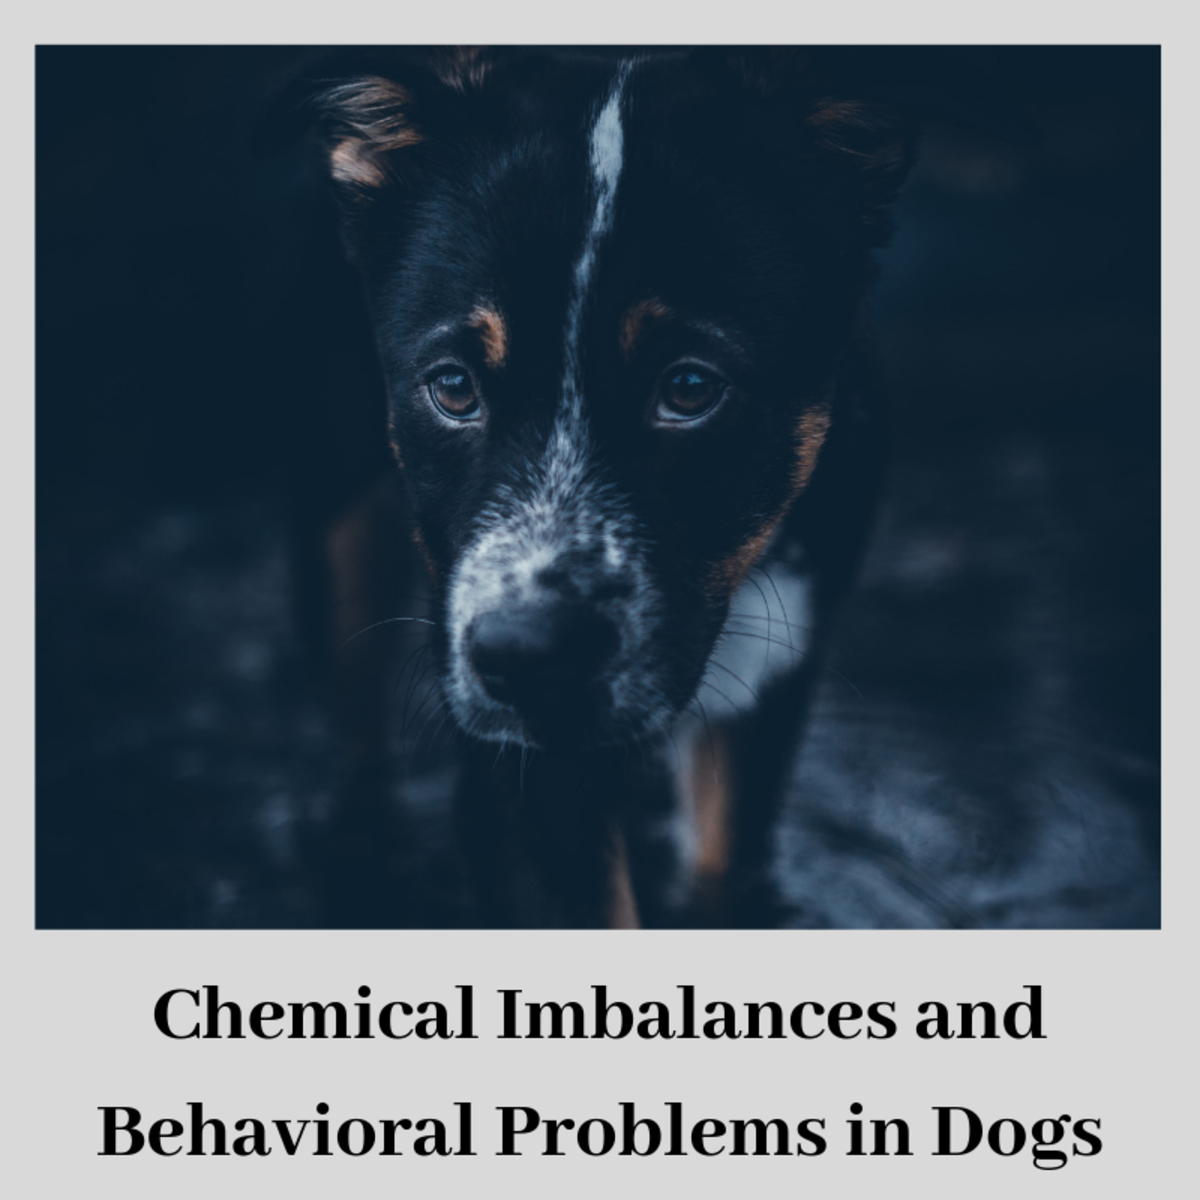 Dogs xanax behavior modifications for